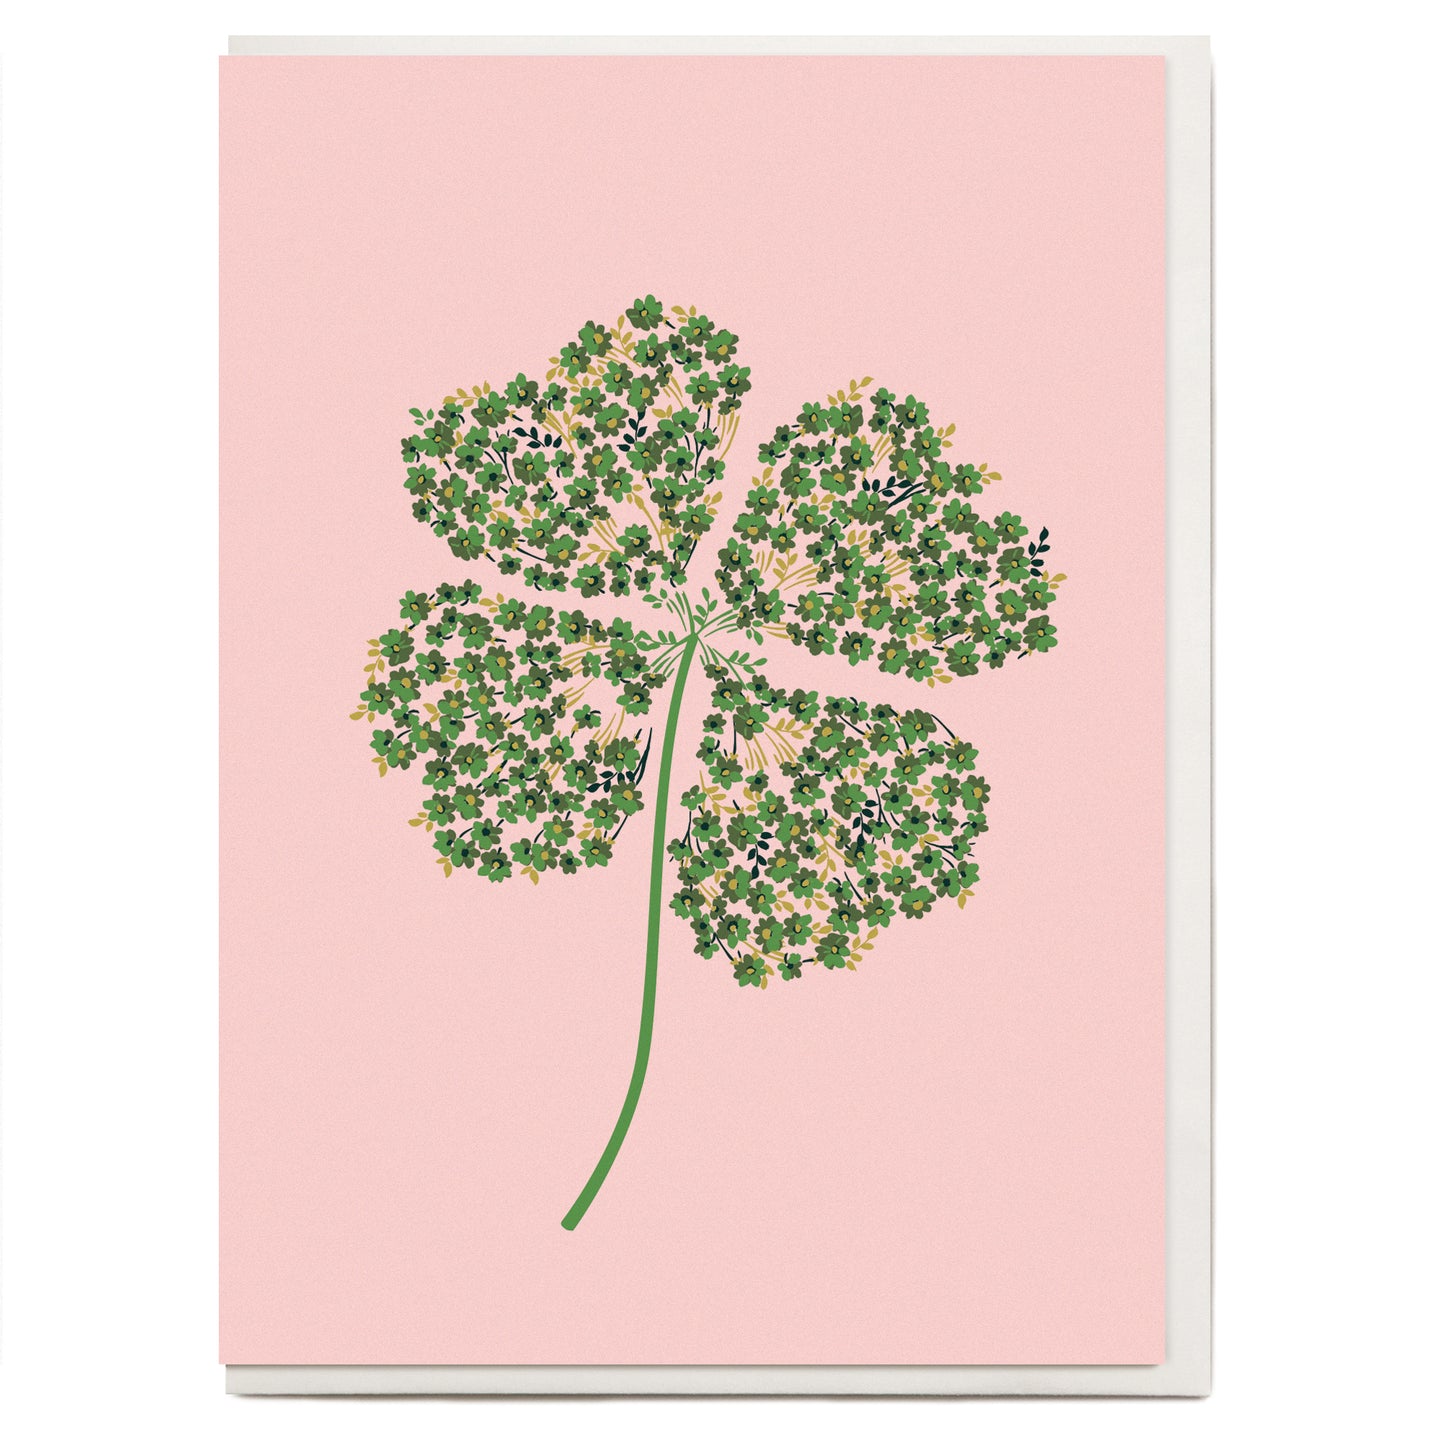 Four Leaf Clover Greeting Card